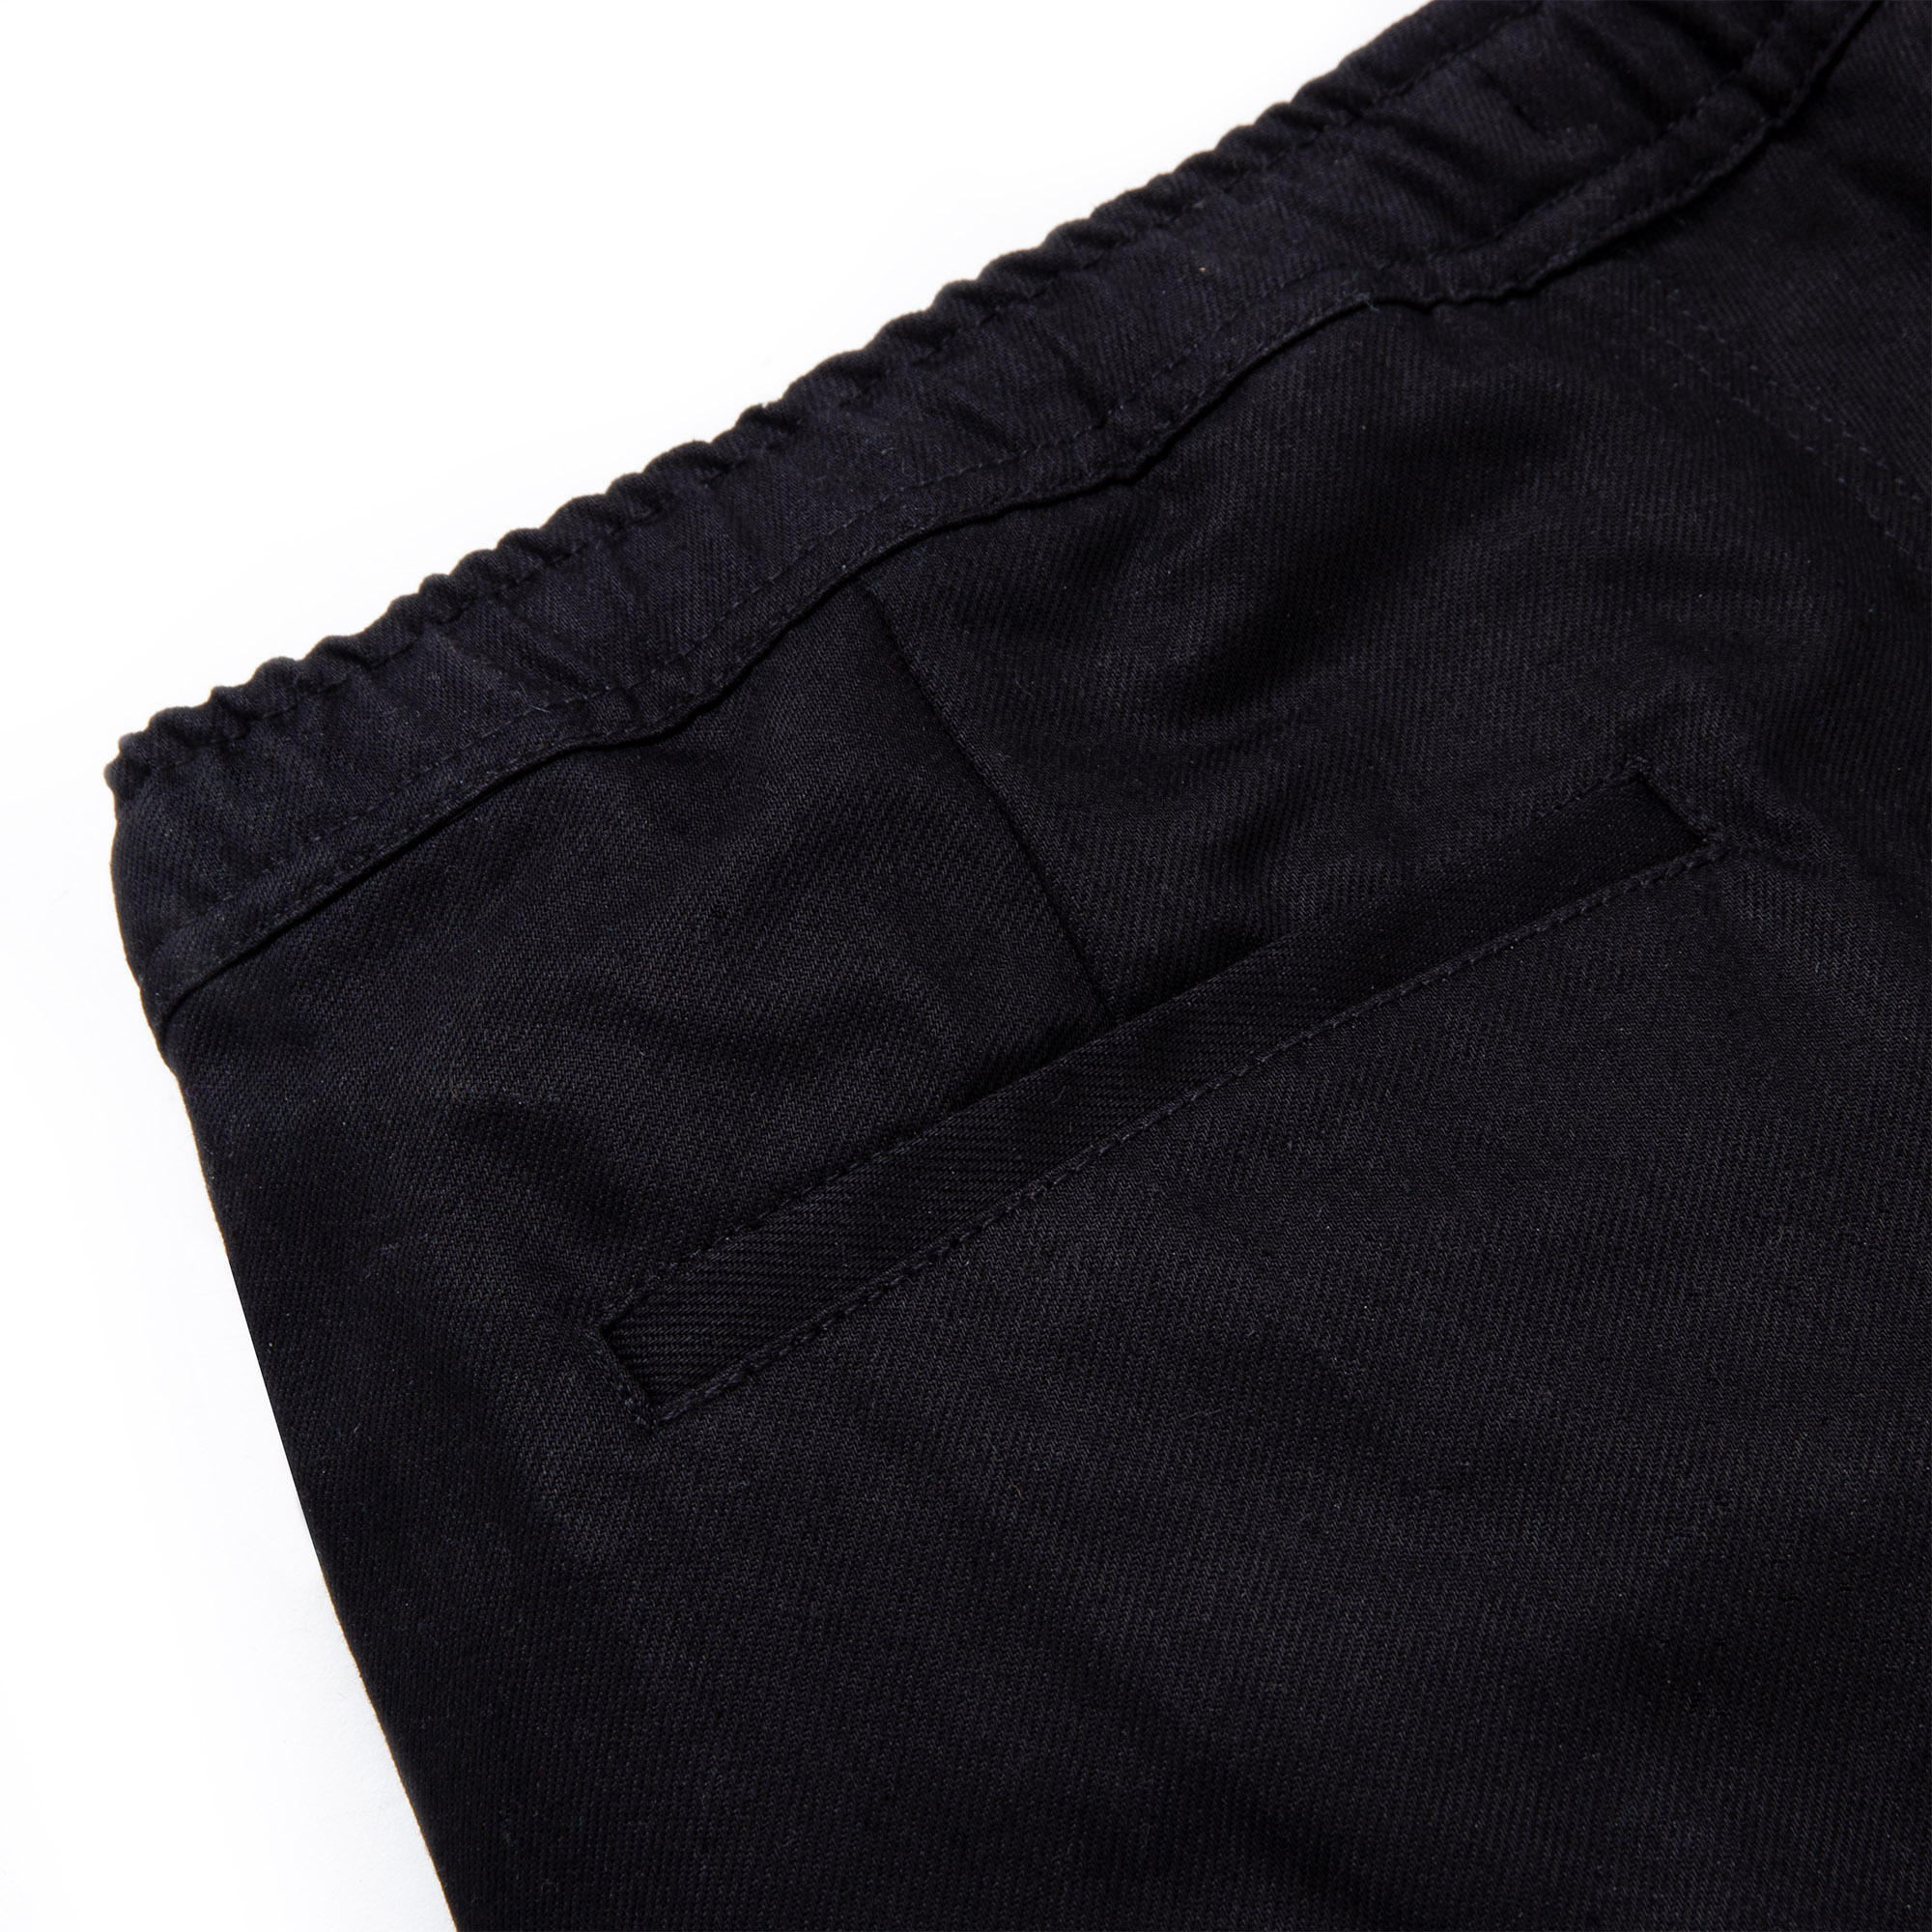 DirtyCoins Cargo Shorts - Black